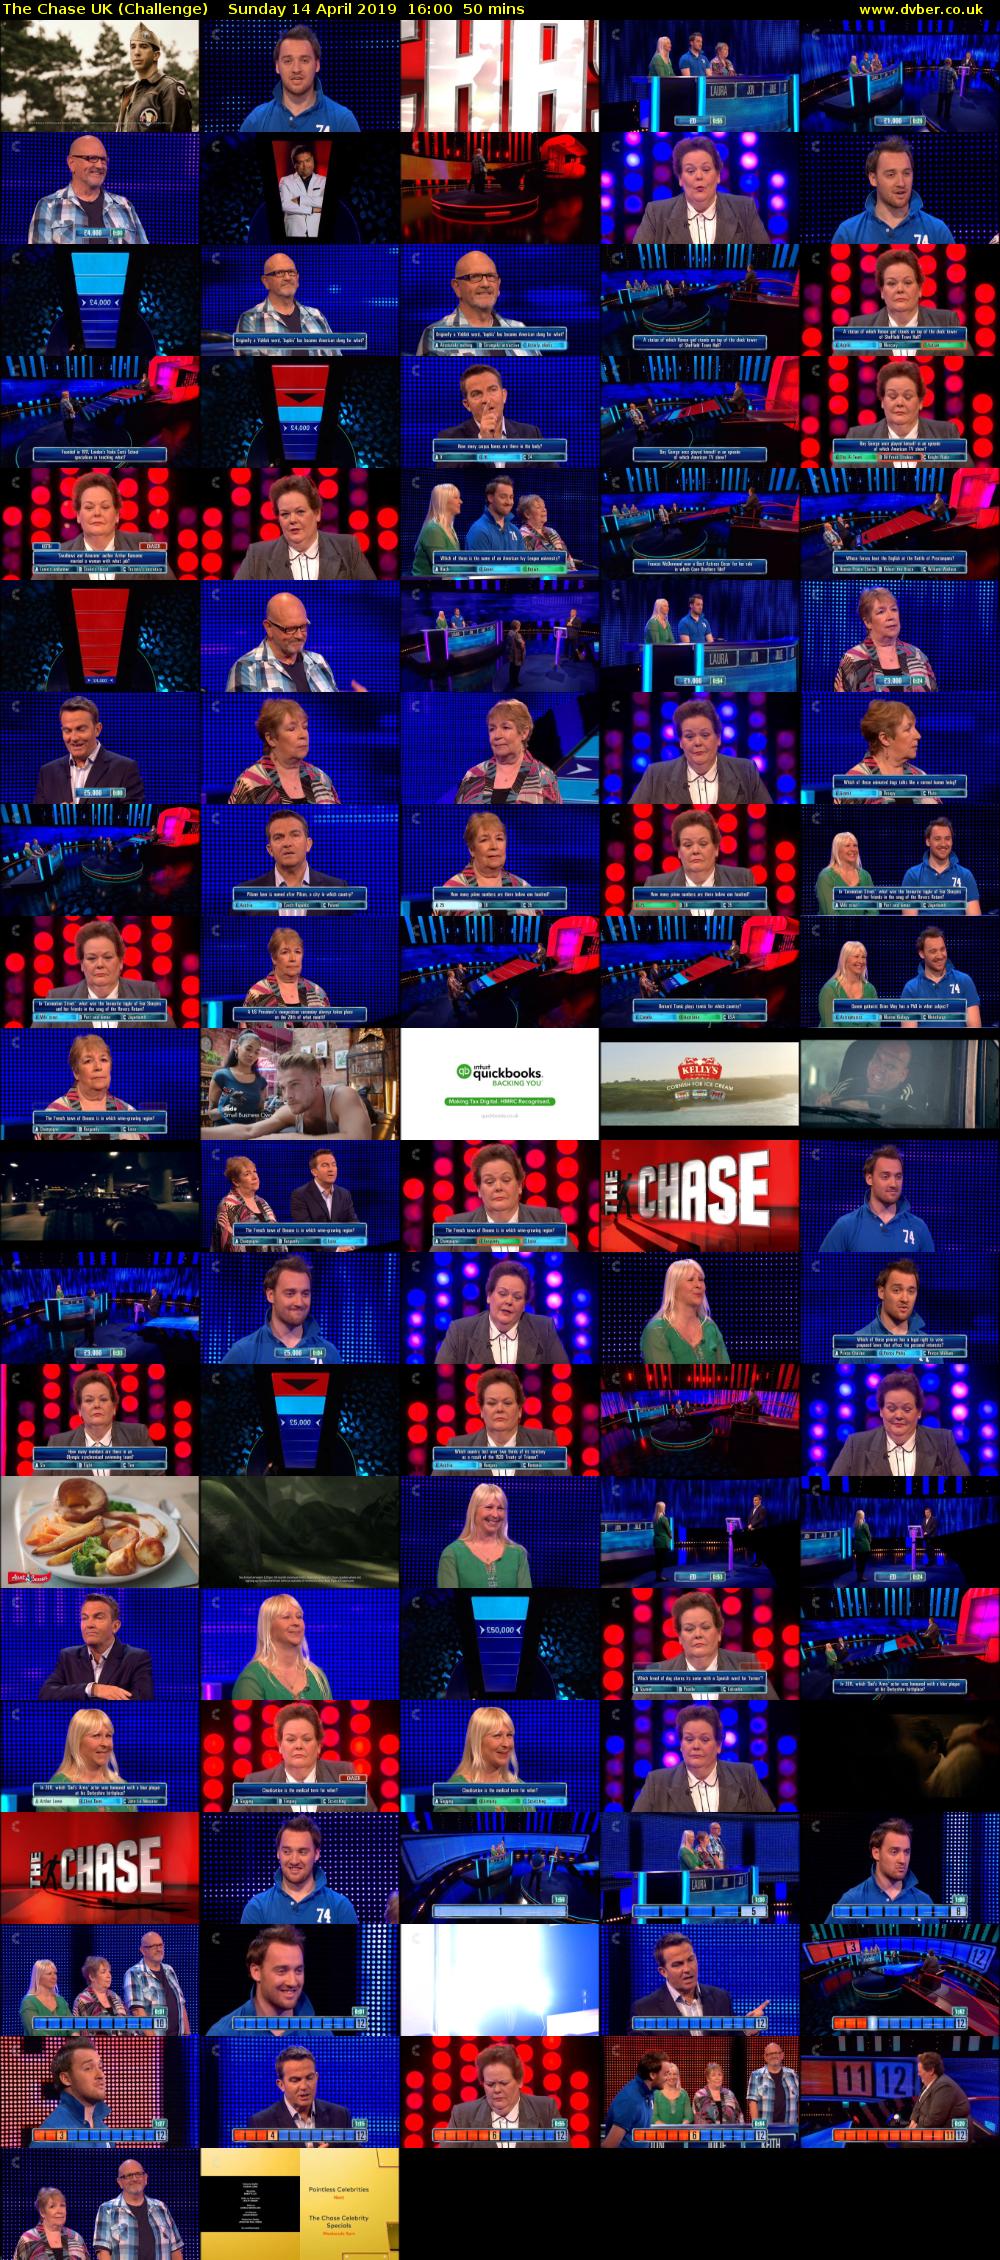 The Chase UK (Challenge) Sunday 14 April 2019 16:00 - 16:50